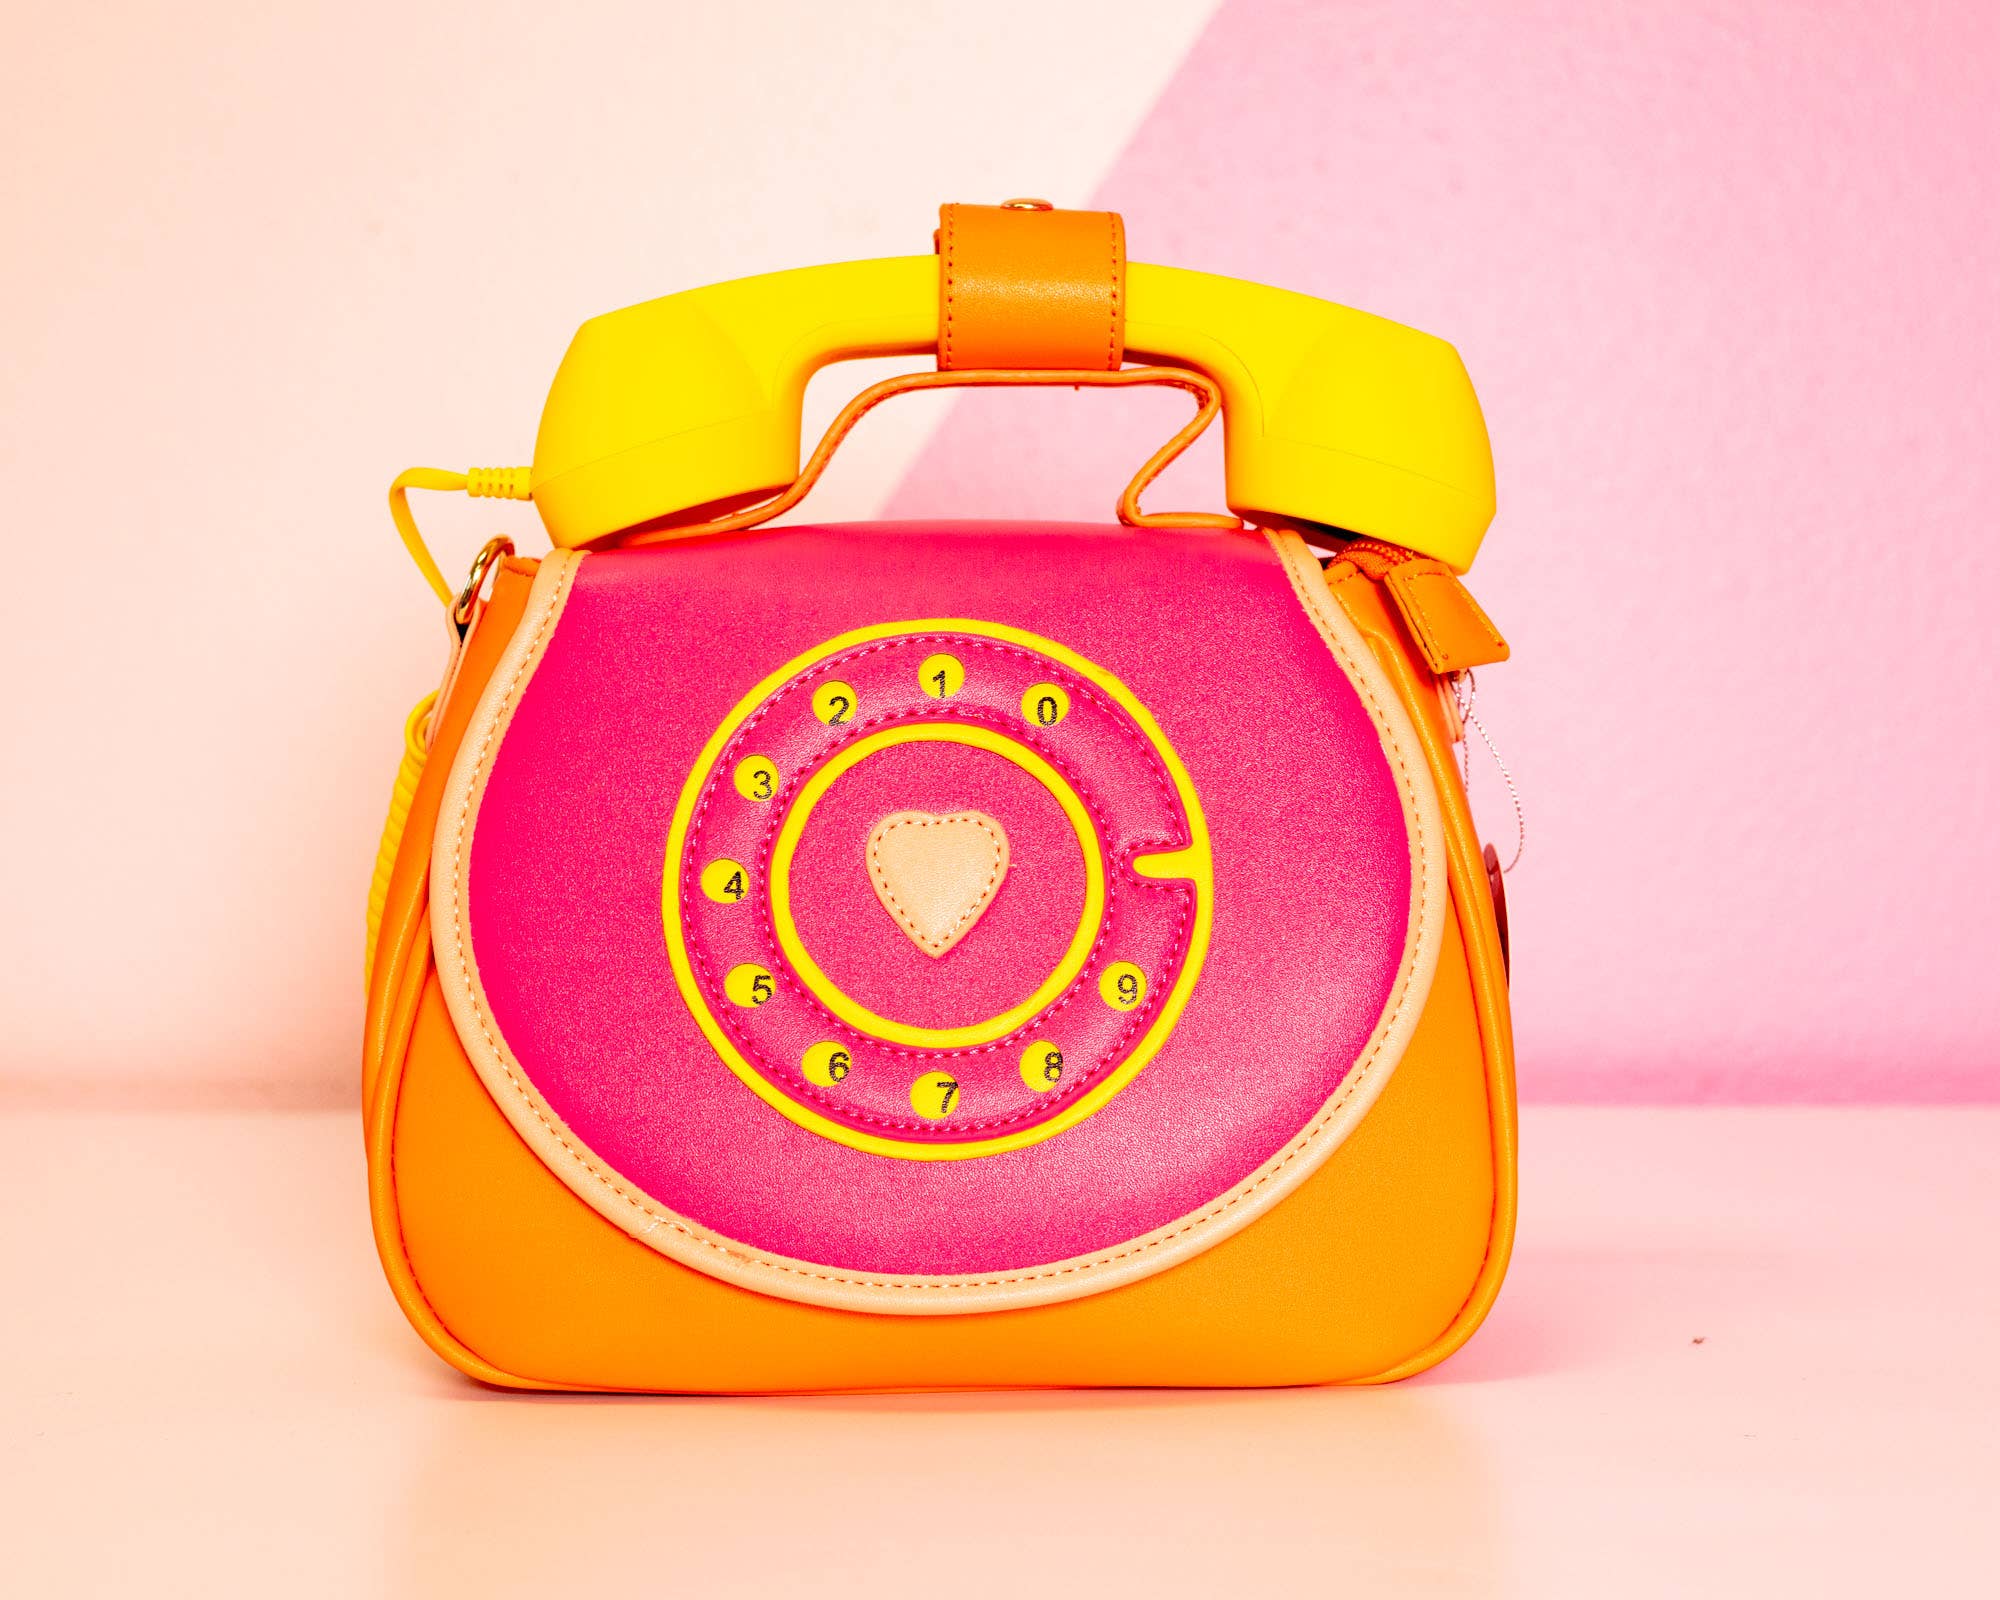 Fruity Pink Phone Convertible Handbag